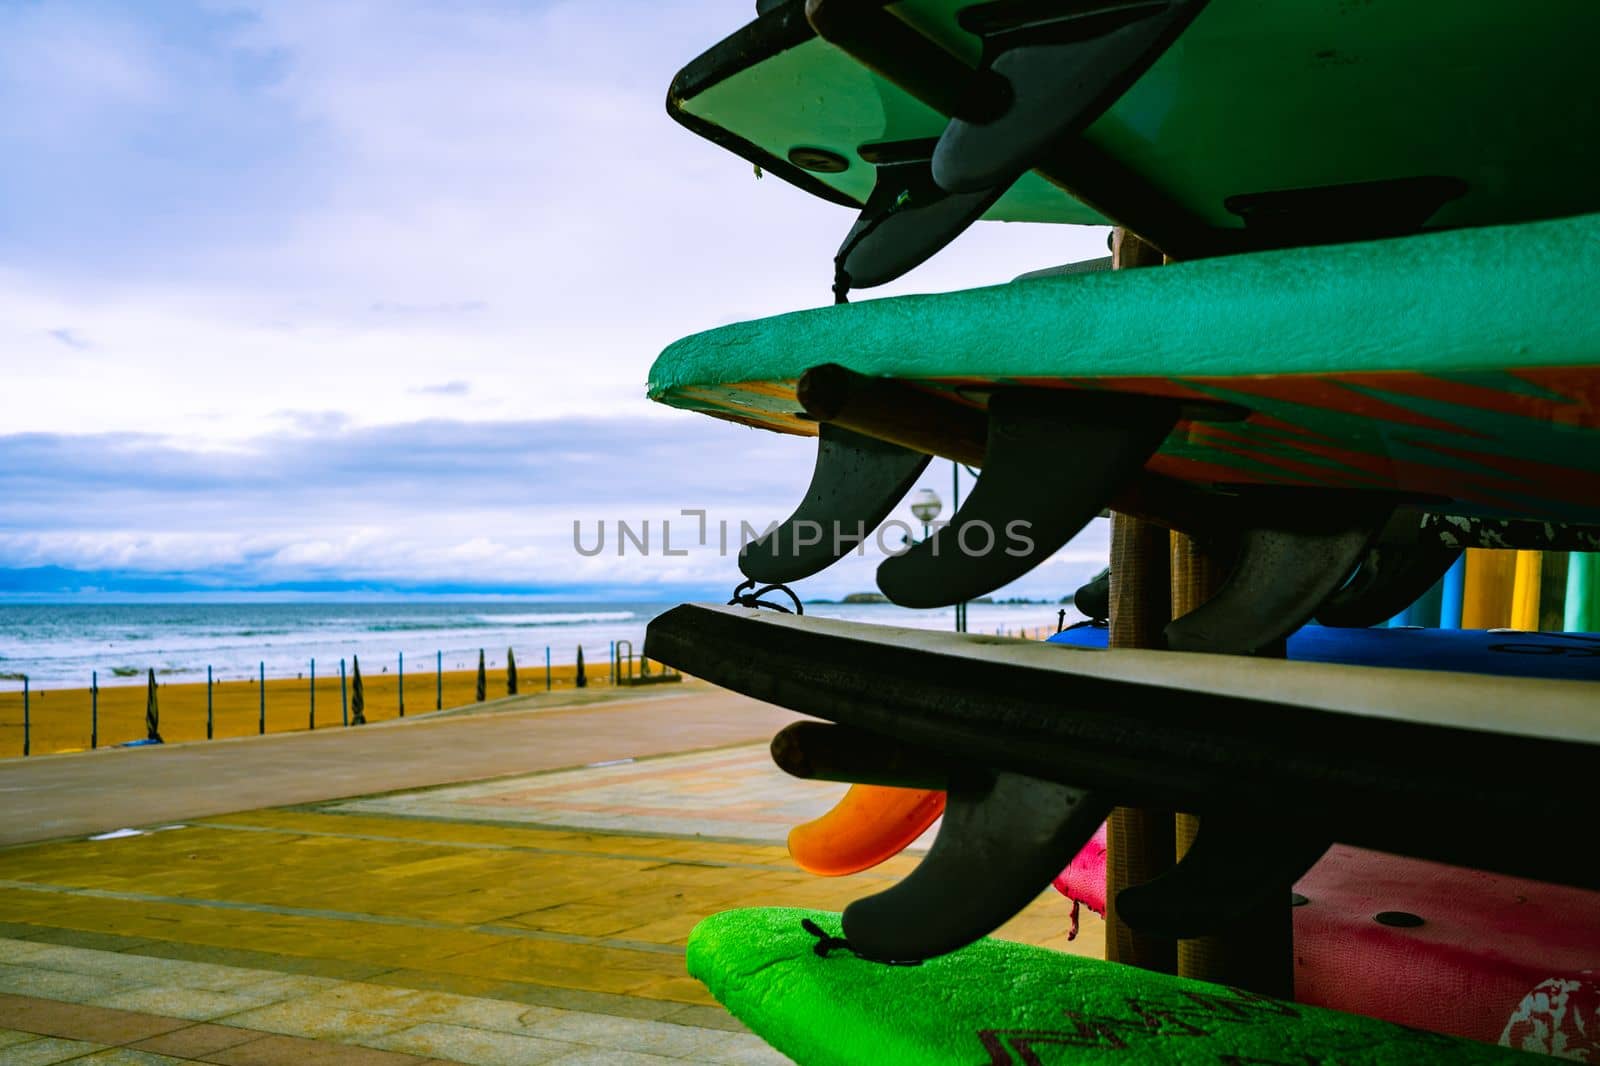 Surfboards on the background of the Atlantic coast of Spain. Surfboard rental. by paca-waca